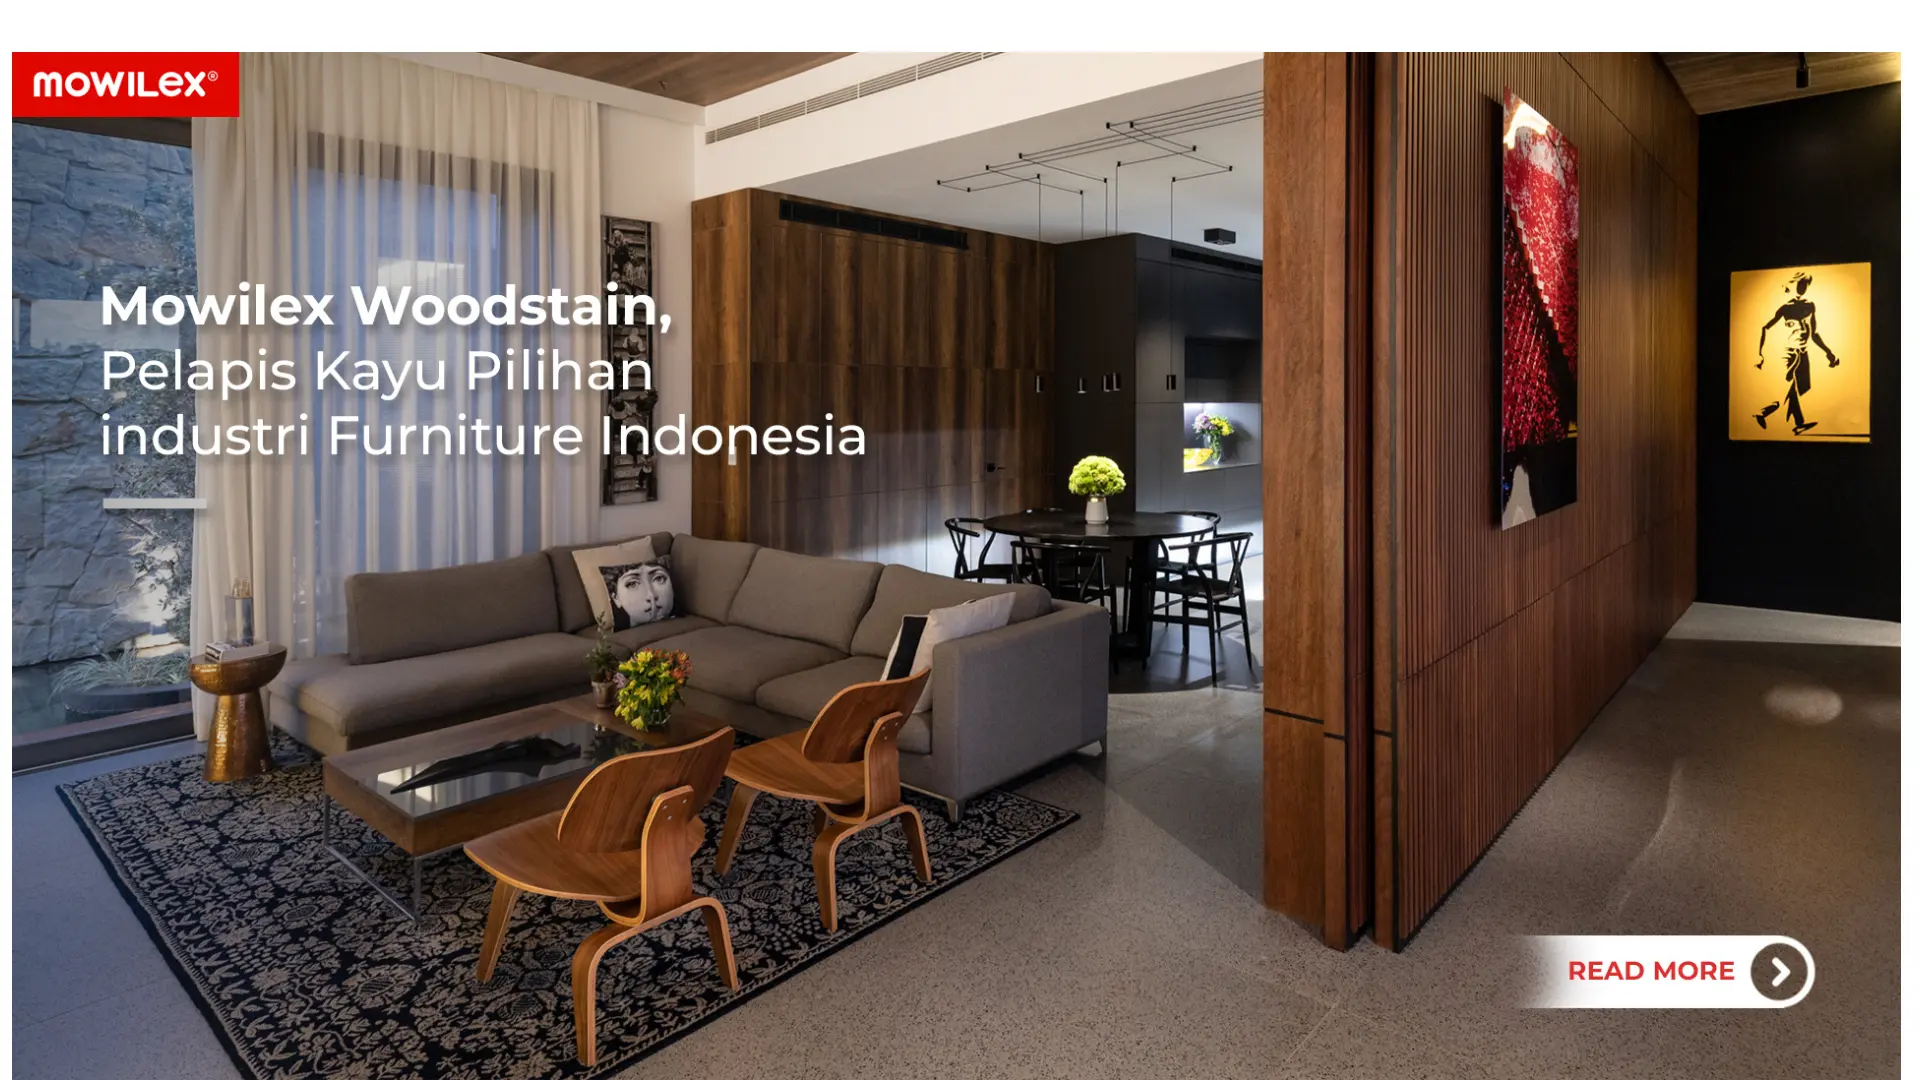 Mowilex Woodstain, Pelapis Kayu Pilihan Industri Furniture Indonesia